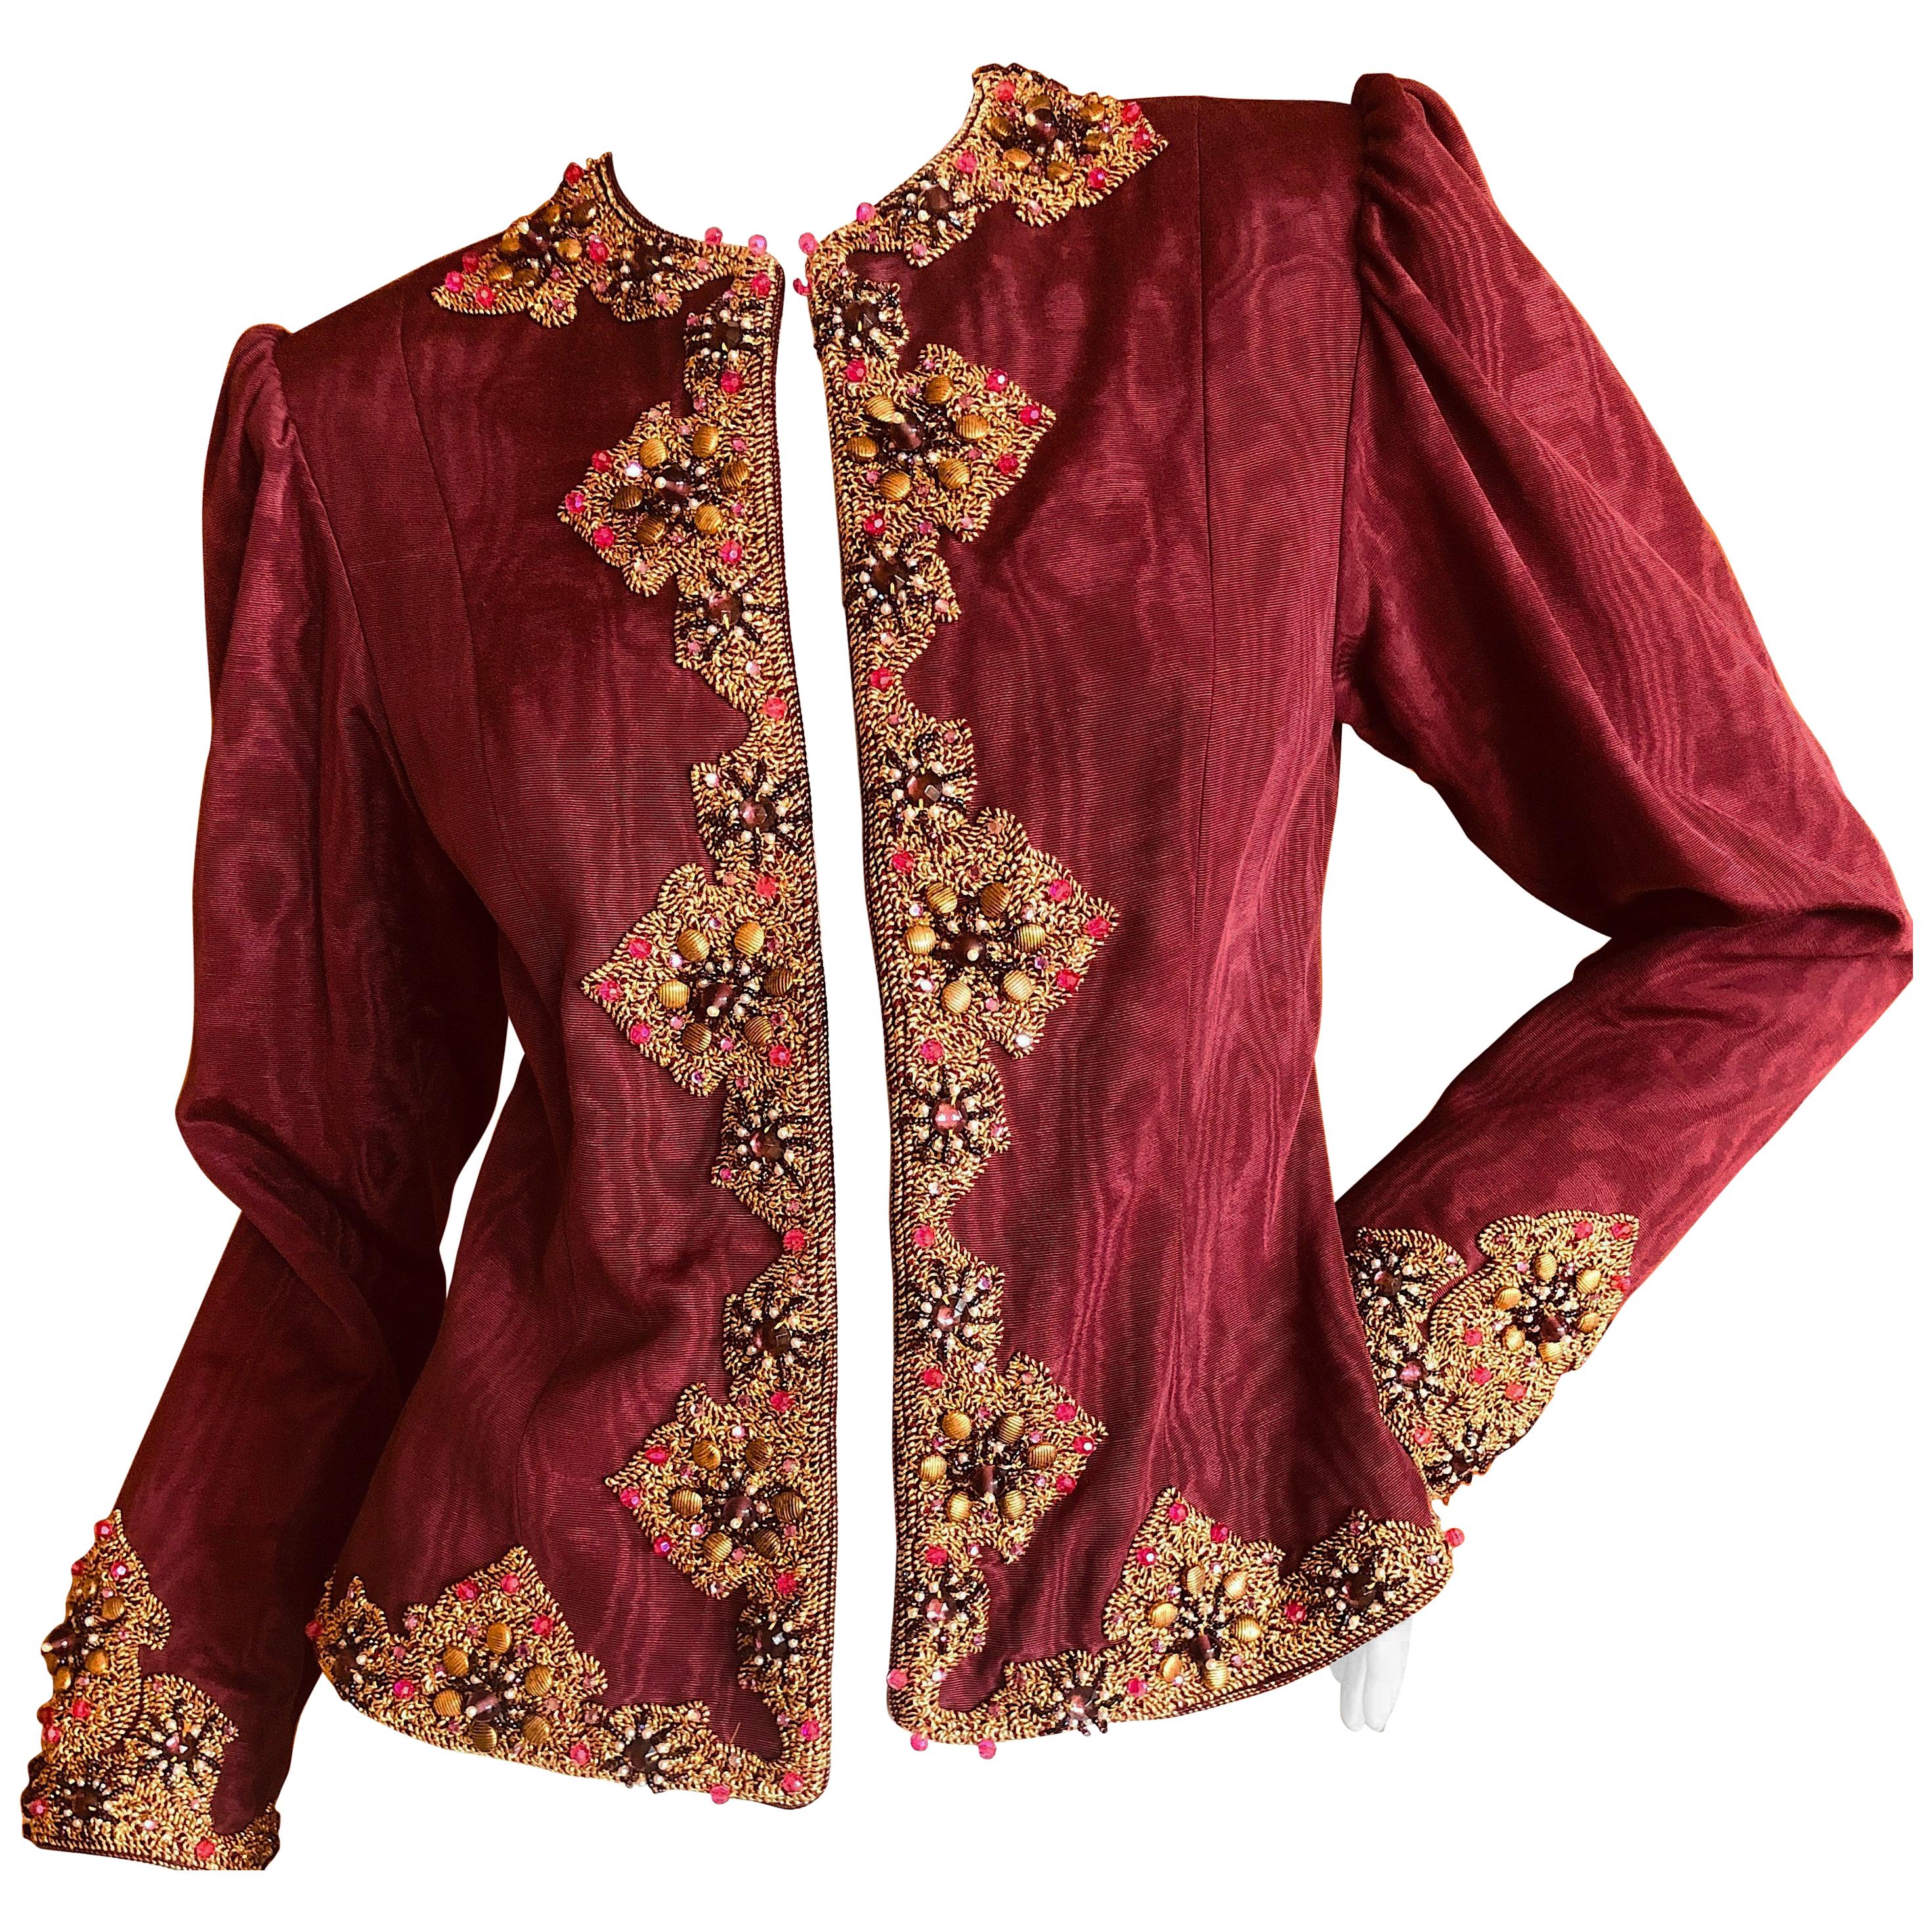 Oscar de la Renta 1970's Moire Silk Evening Jacket with Arabesque Embellishments For Sale